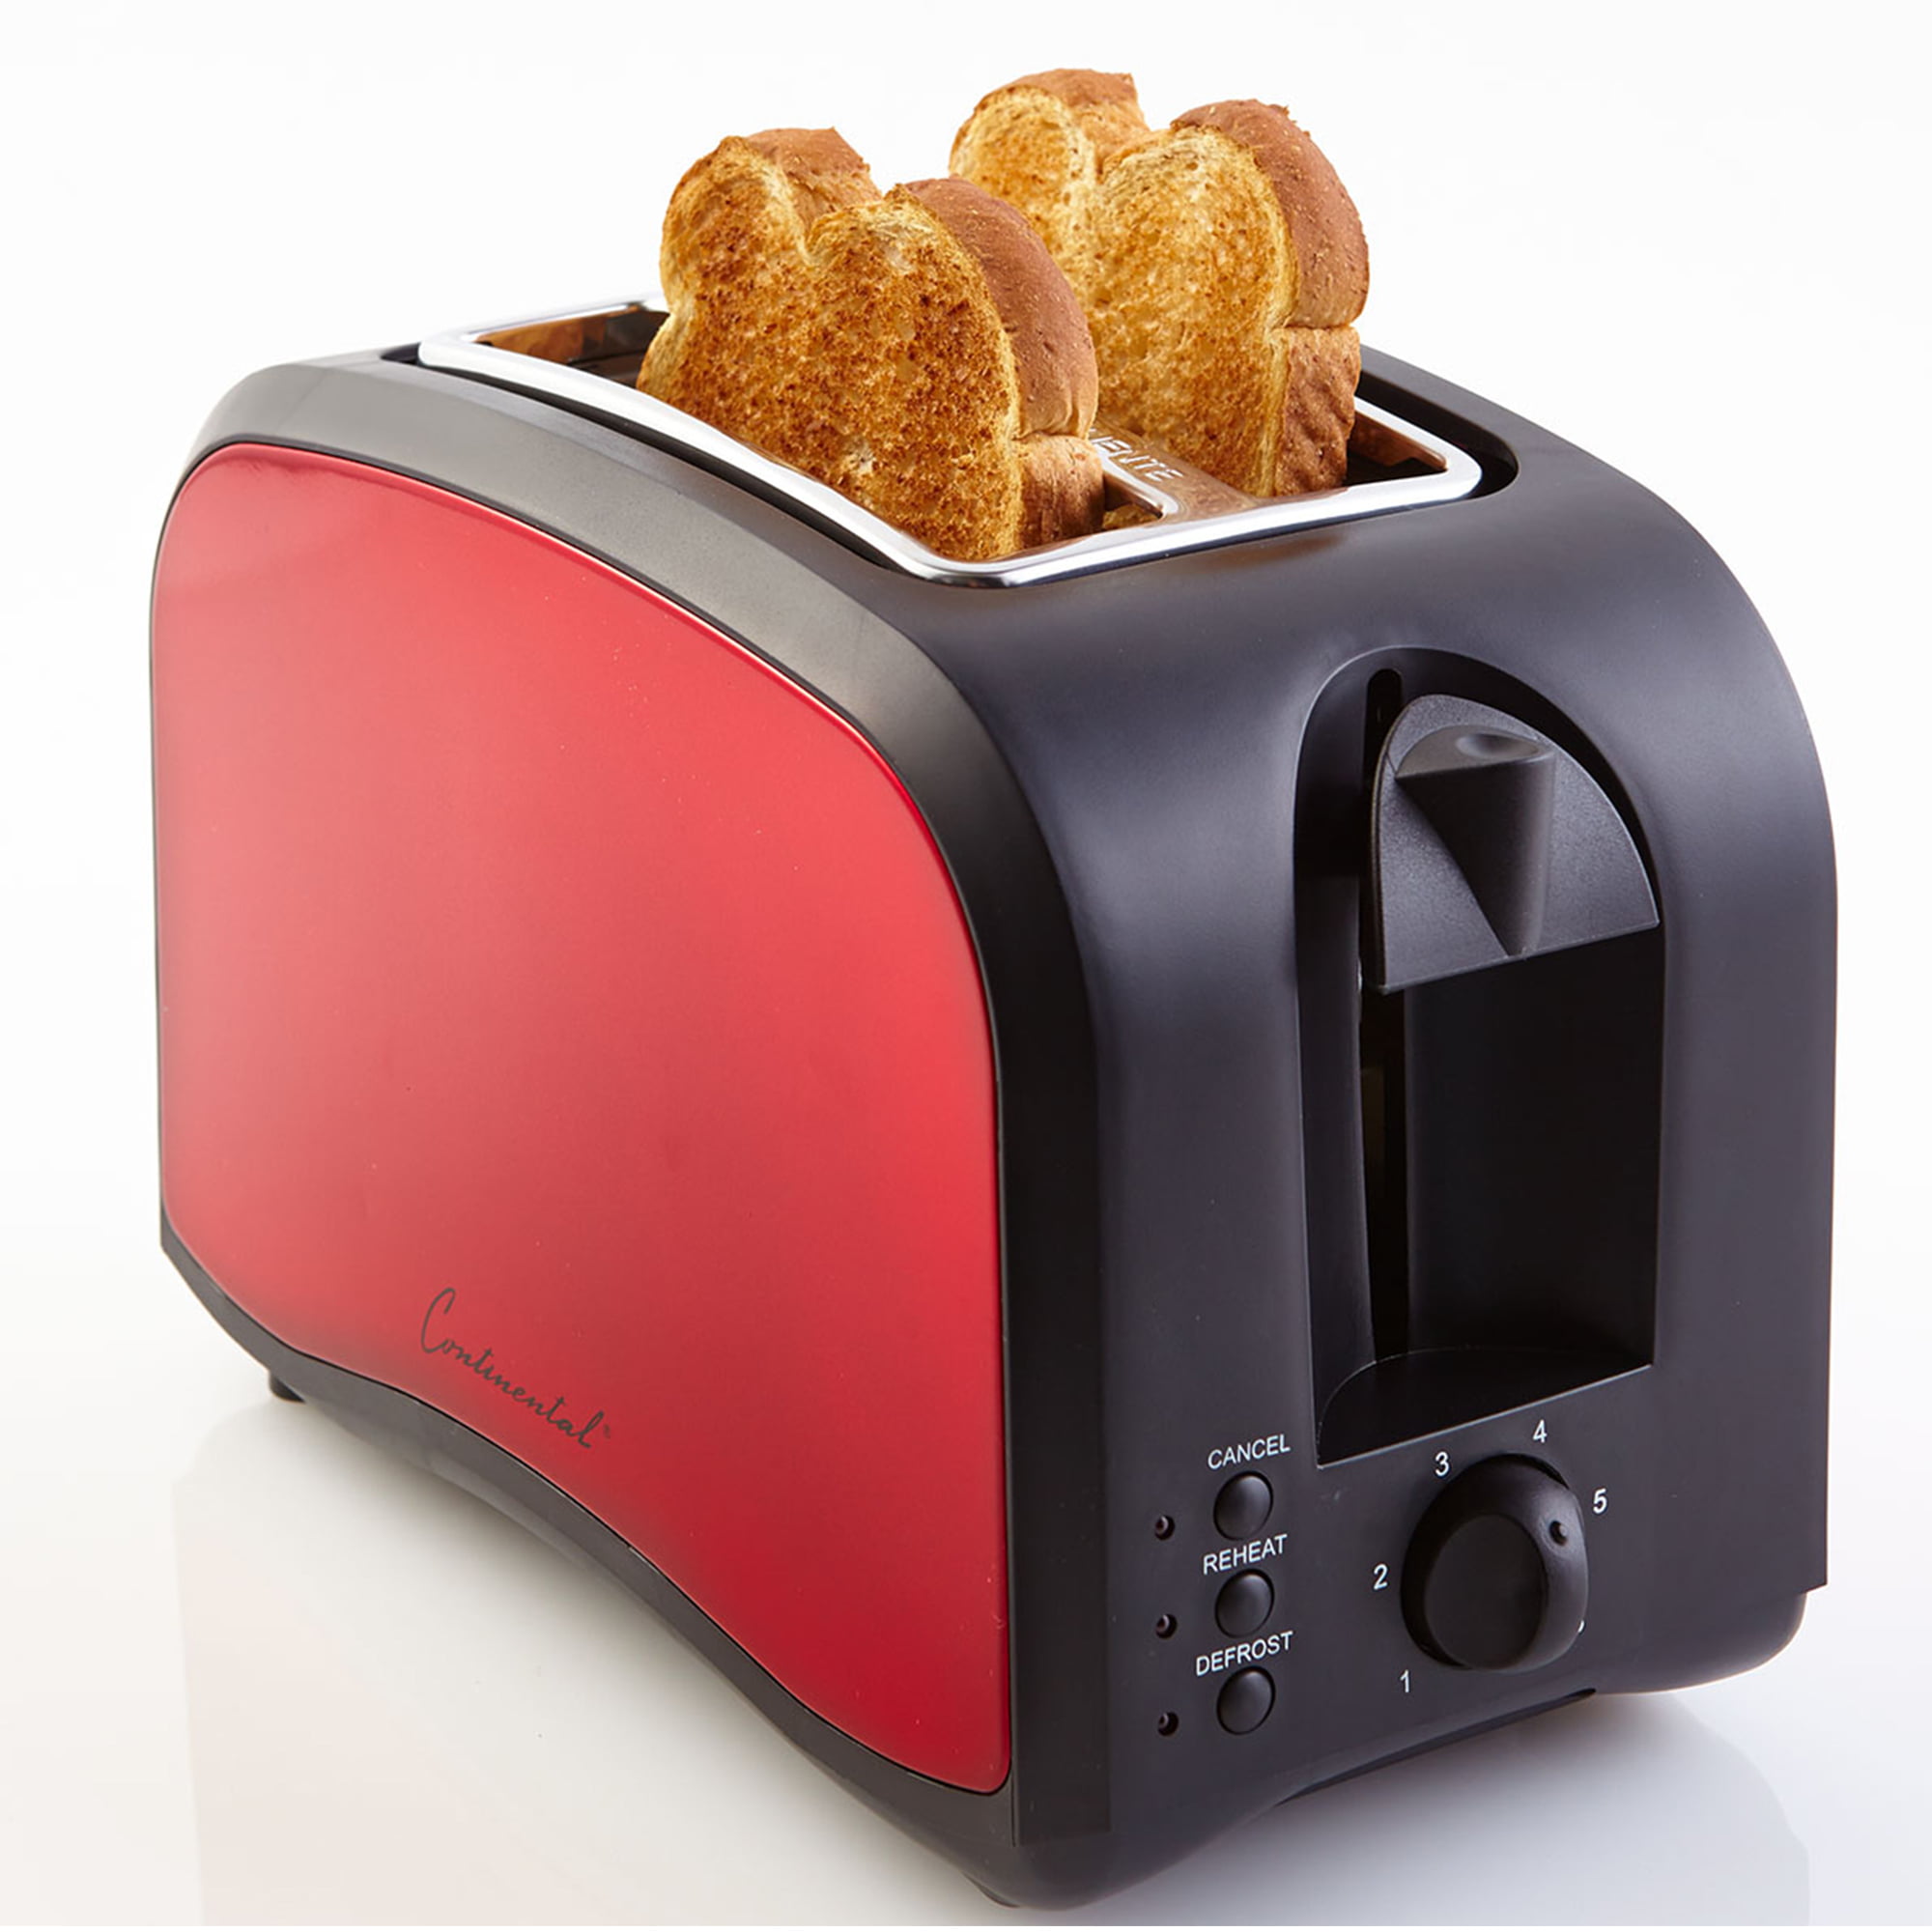 Тостеры рейтинг качества. Тостер reheat 2022. Тостер для сэндвичей Raf r.232 1400w. Печка тостер Alpina SF-2700t. 1400w Black 4 Slice cool Touch Toaster.